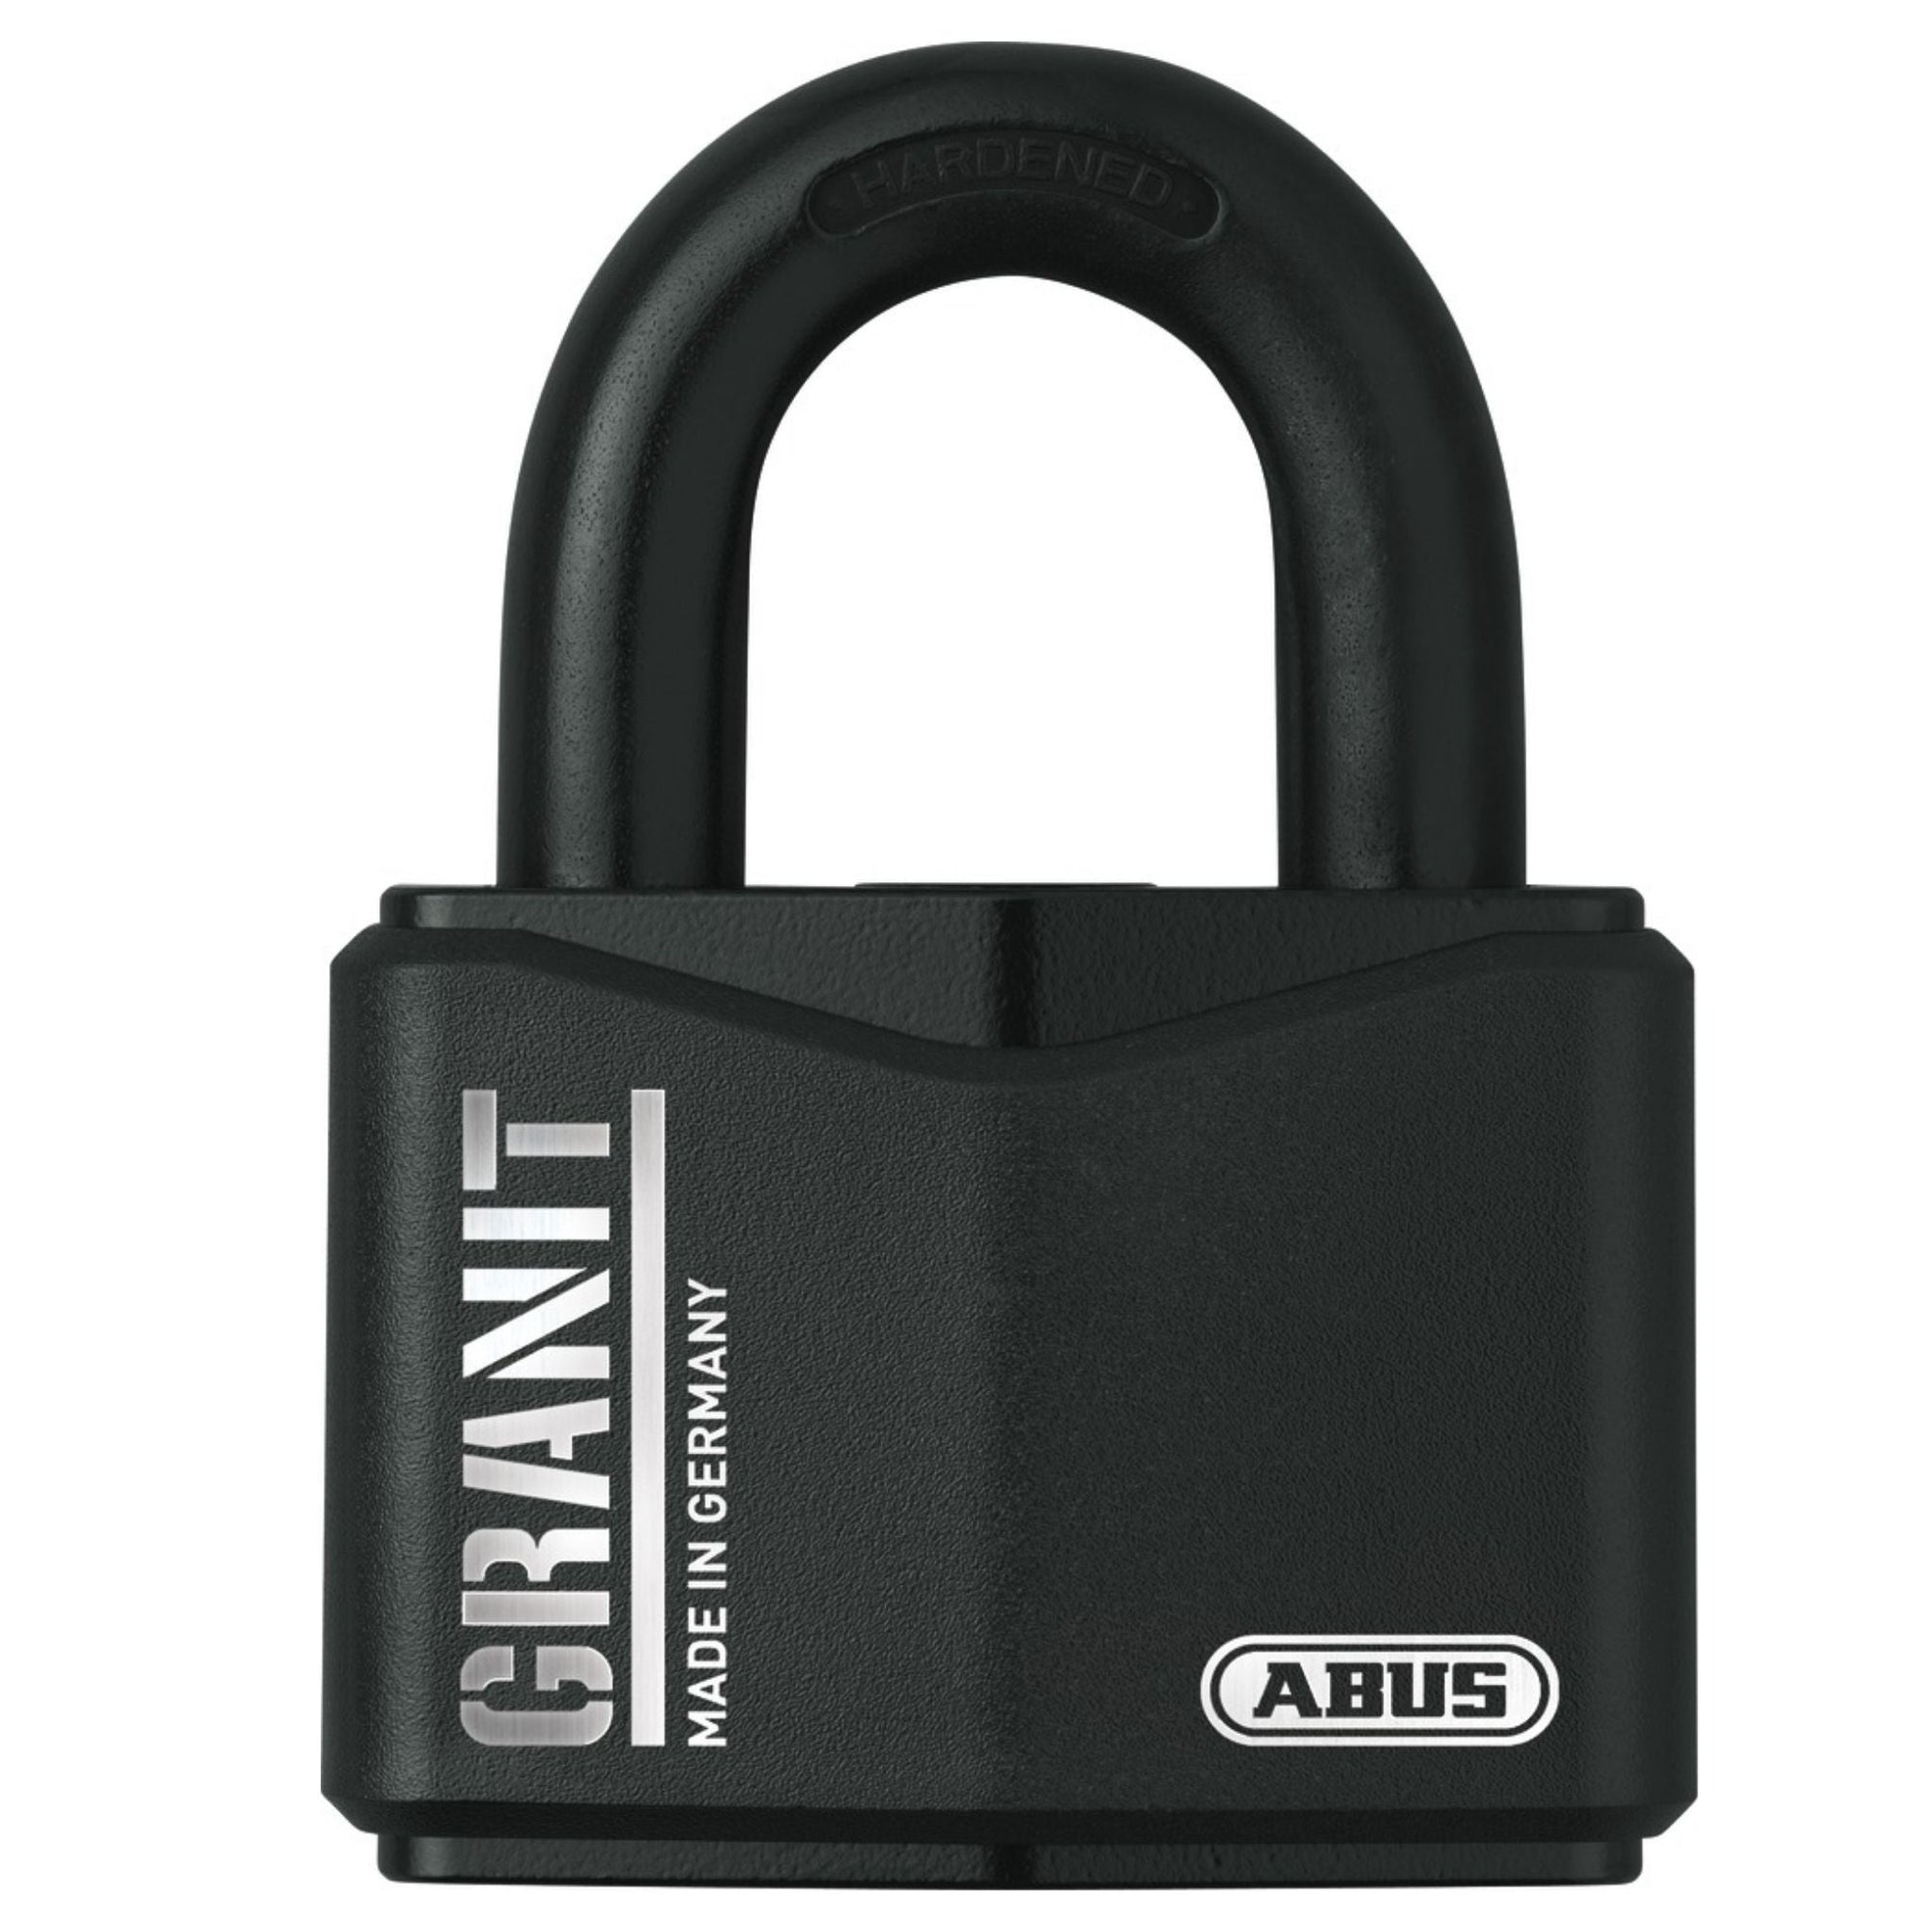 Abus 37/70 KA 5544653 Granit Lock Keyed Alike Black Granite Padlocks to Match Existing Key# 5544653 - The Lock Source